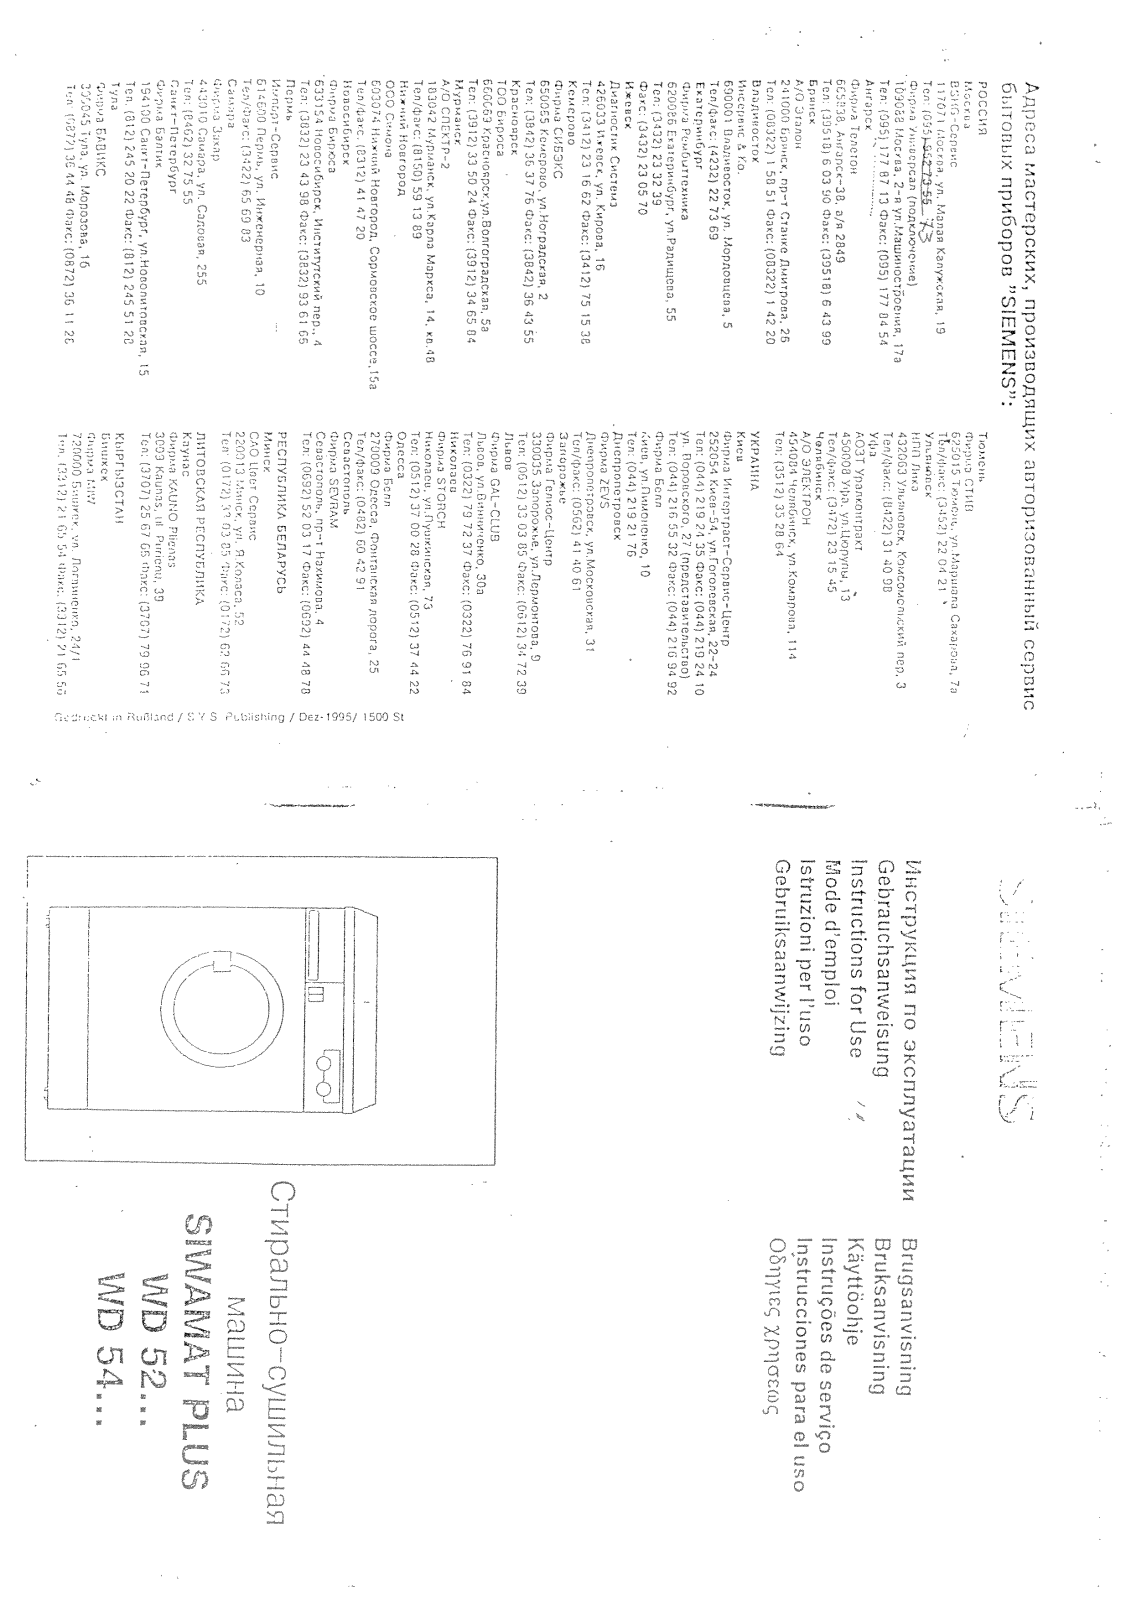 Siemens Siwamat Plus 5201, Siwamat Plus 5433, WD 54330, WD 52030, WD 54310 User Manual